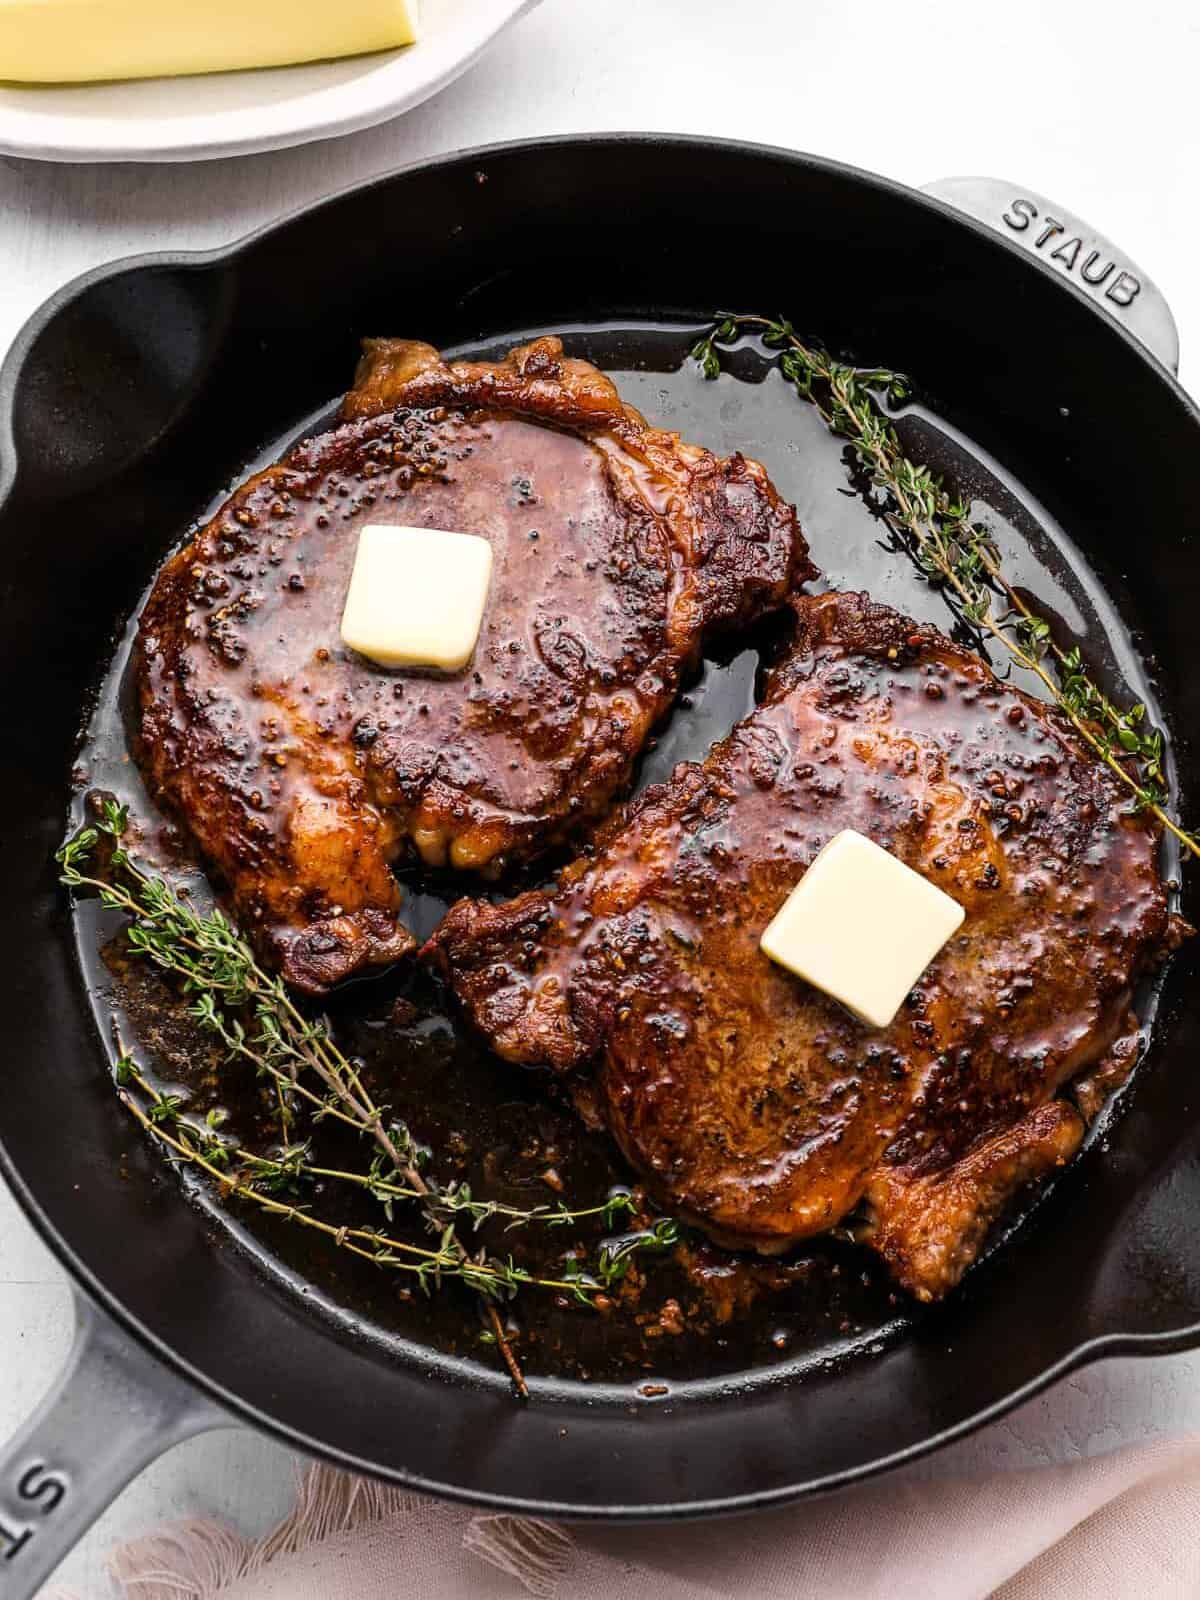 Perfect, Easy Ribeye Steak Recipe [VIDEO] - Dinner, then Dessert